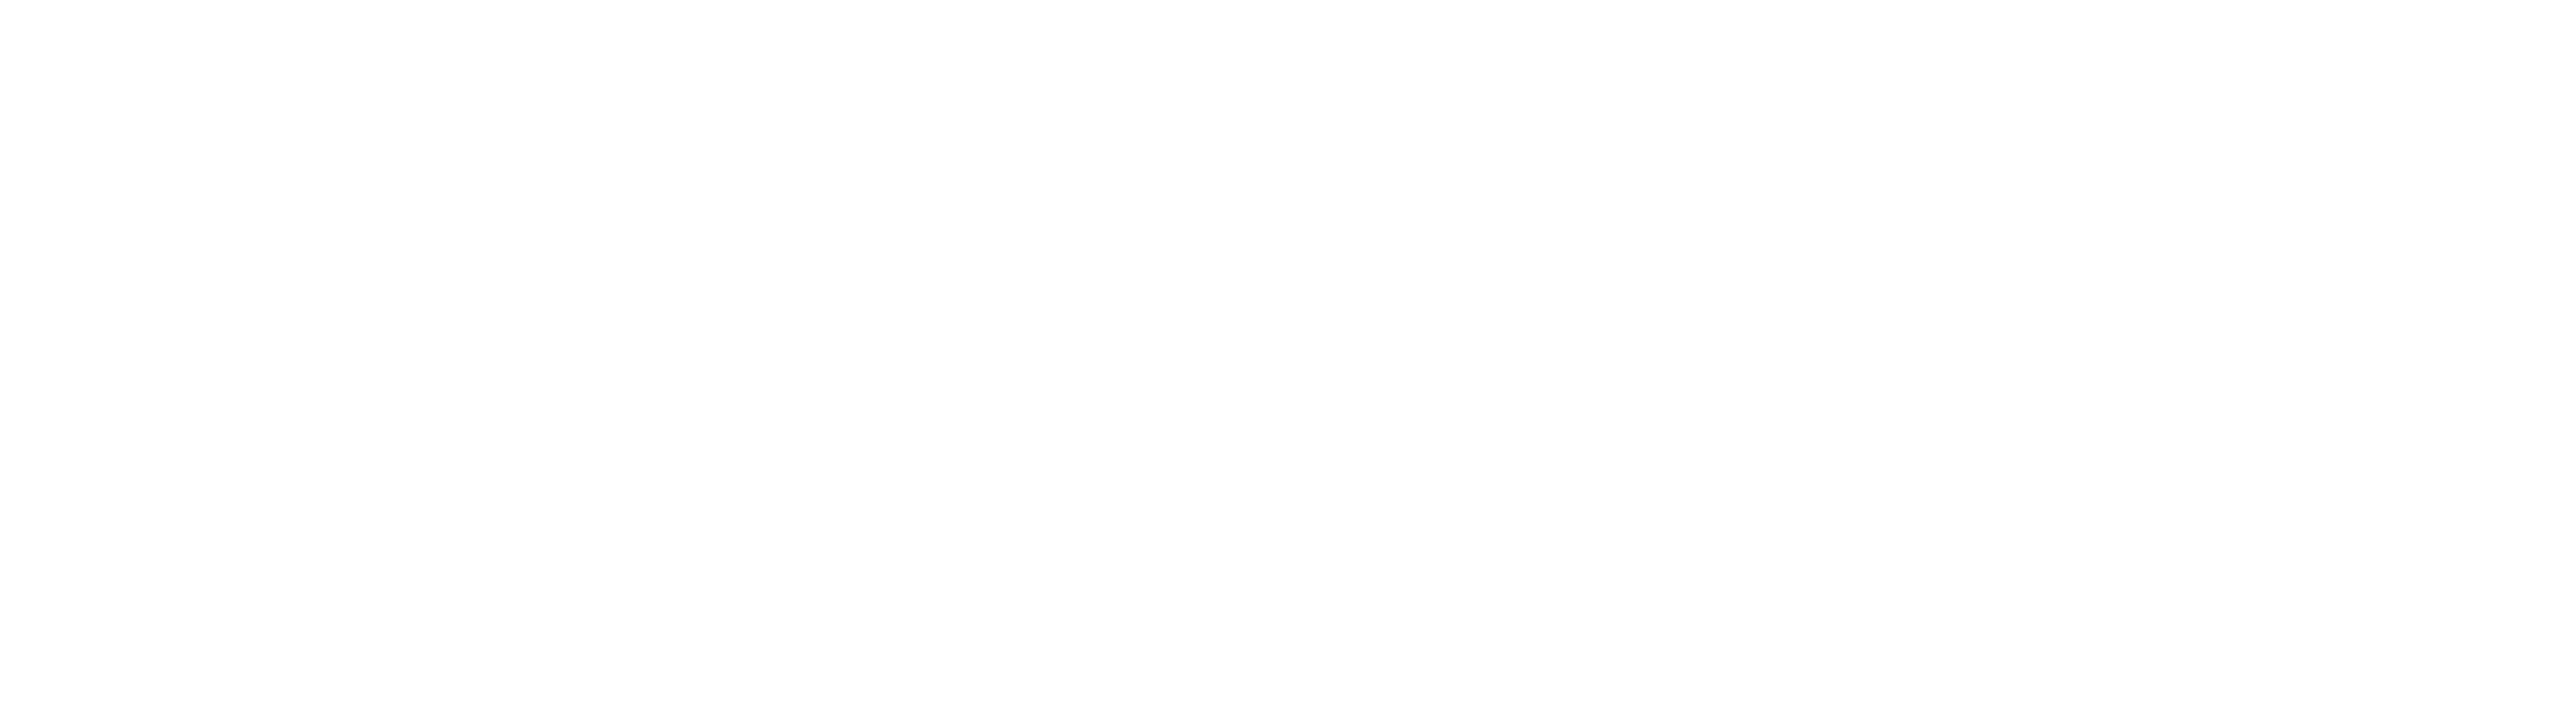 Scottish Athletics